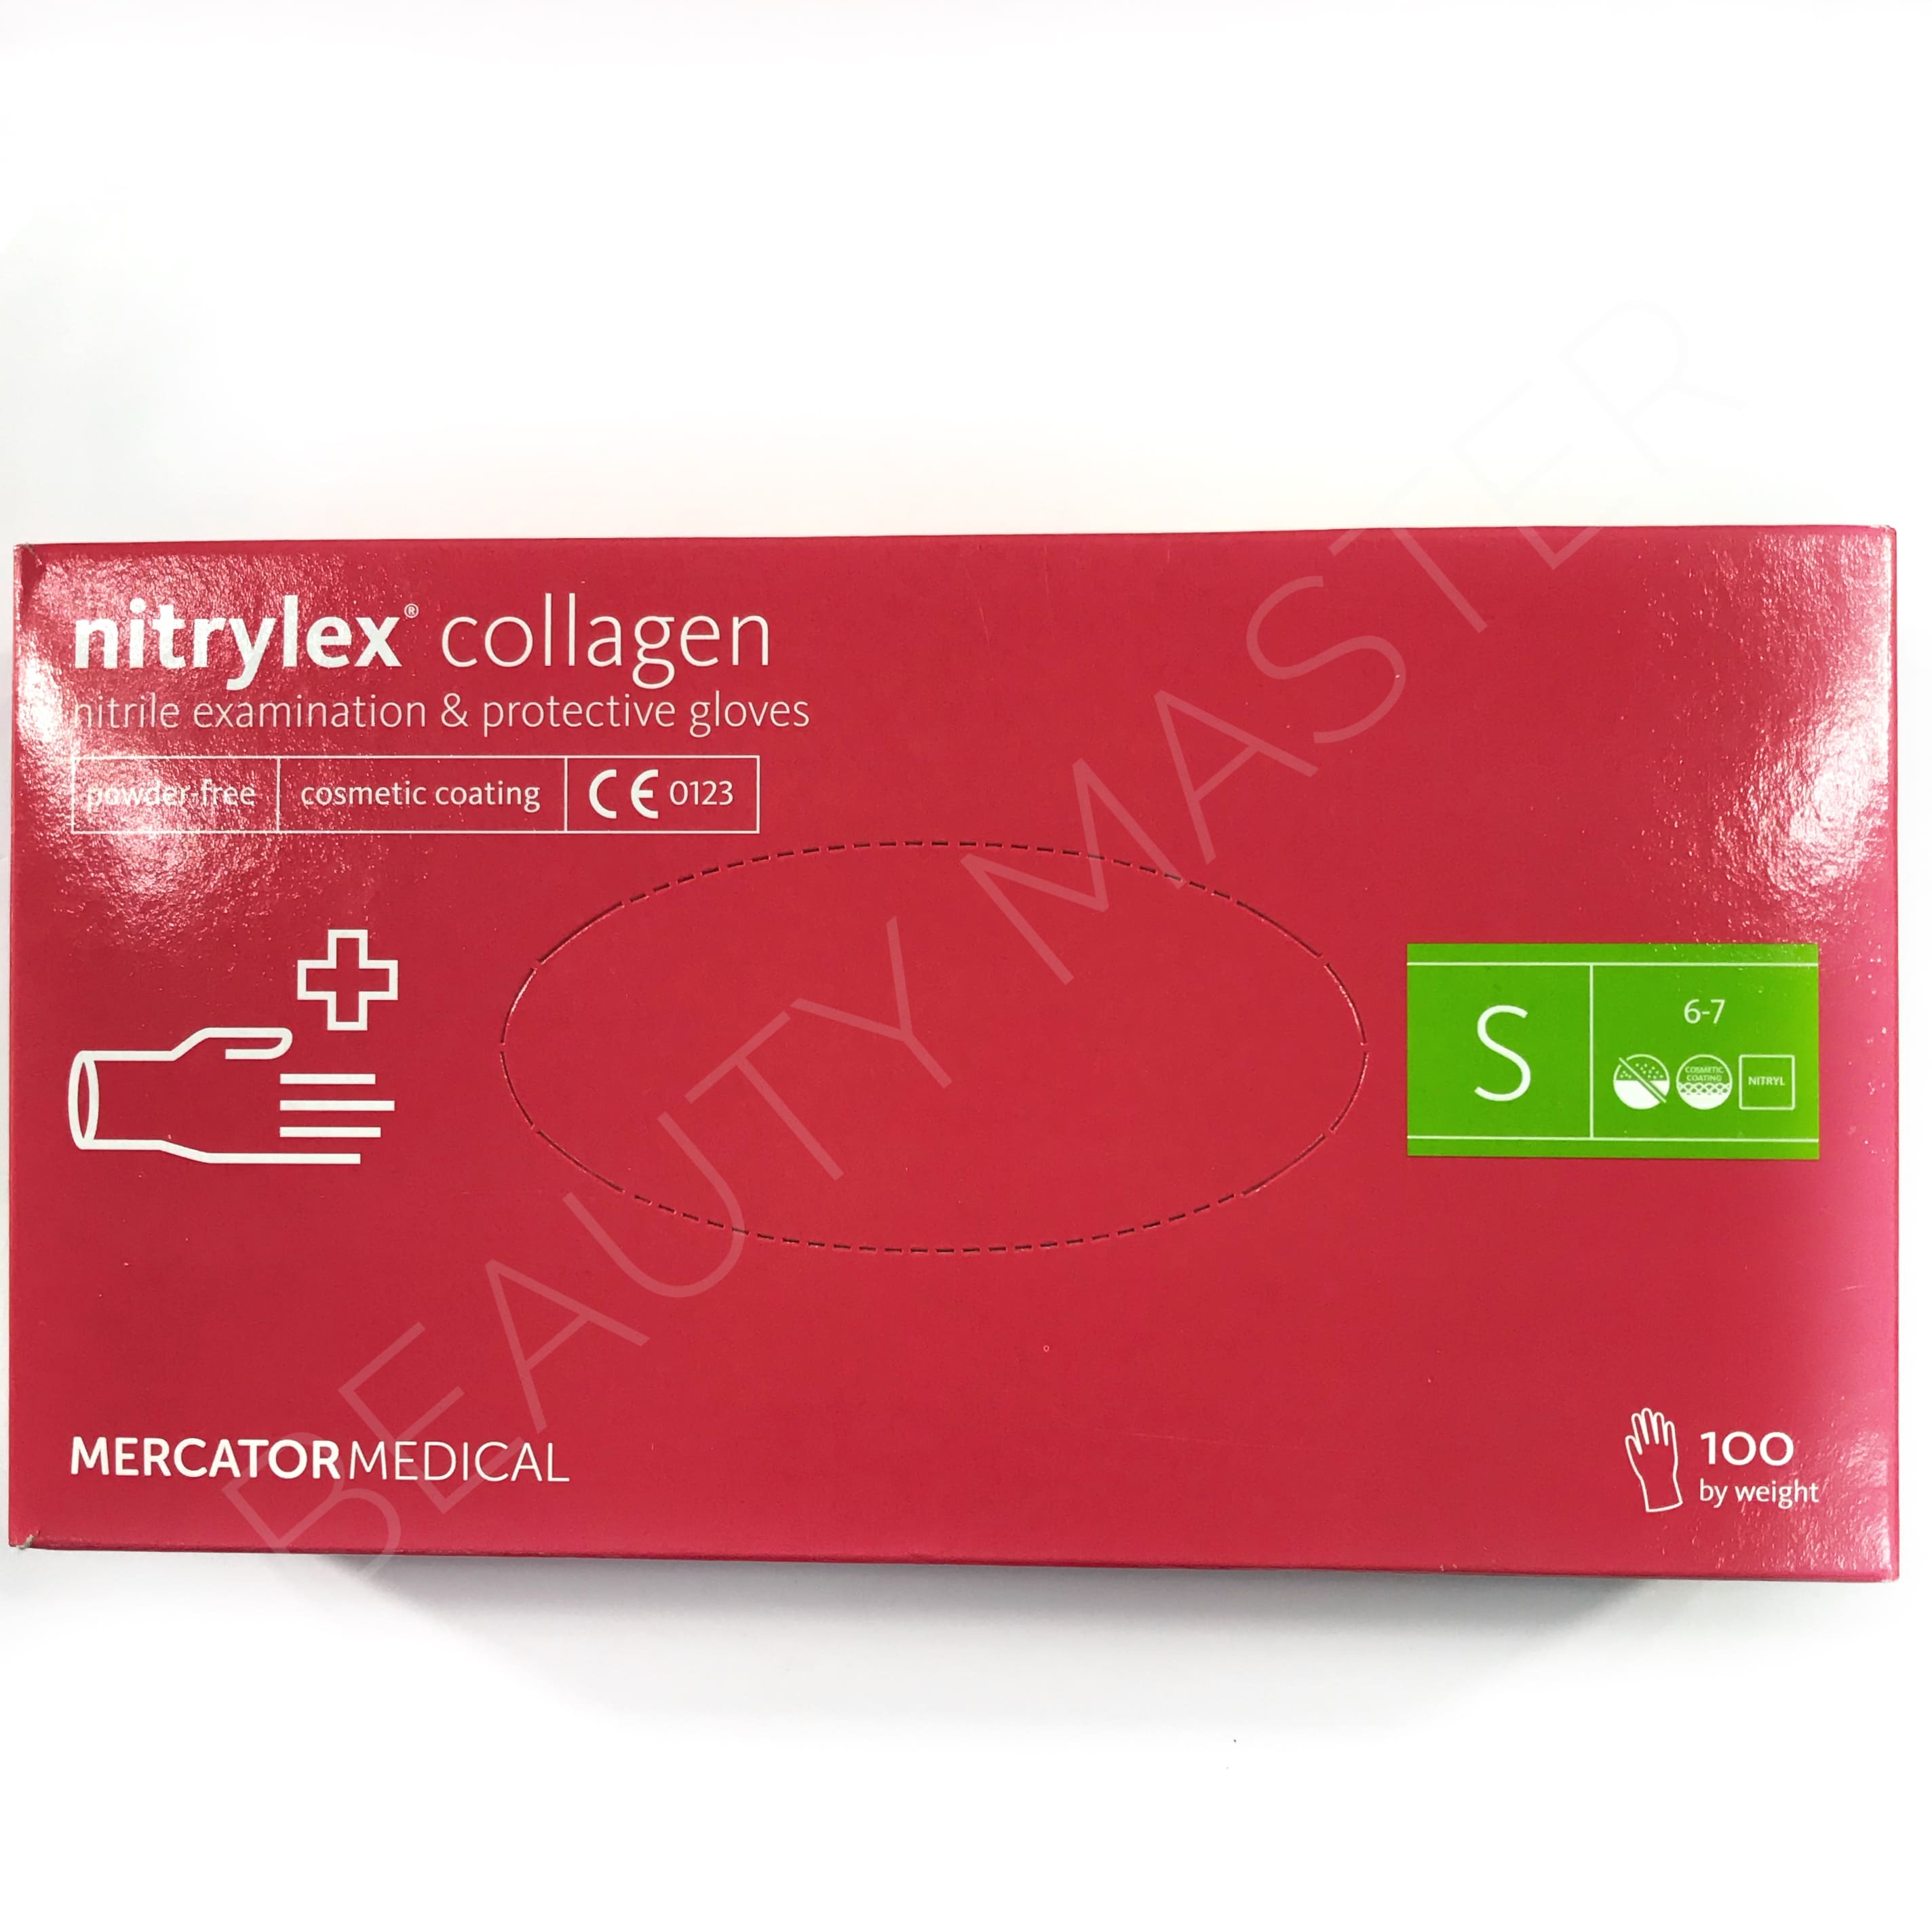 Перчатки nitrylex collagen нитр., розовые, р.S, пачка 100шт